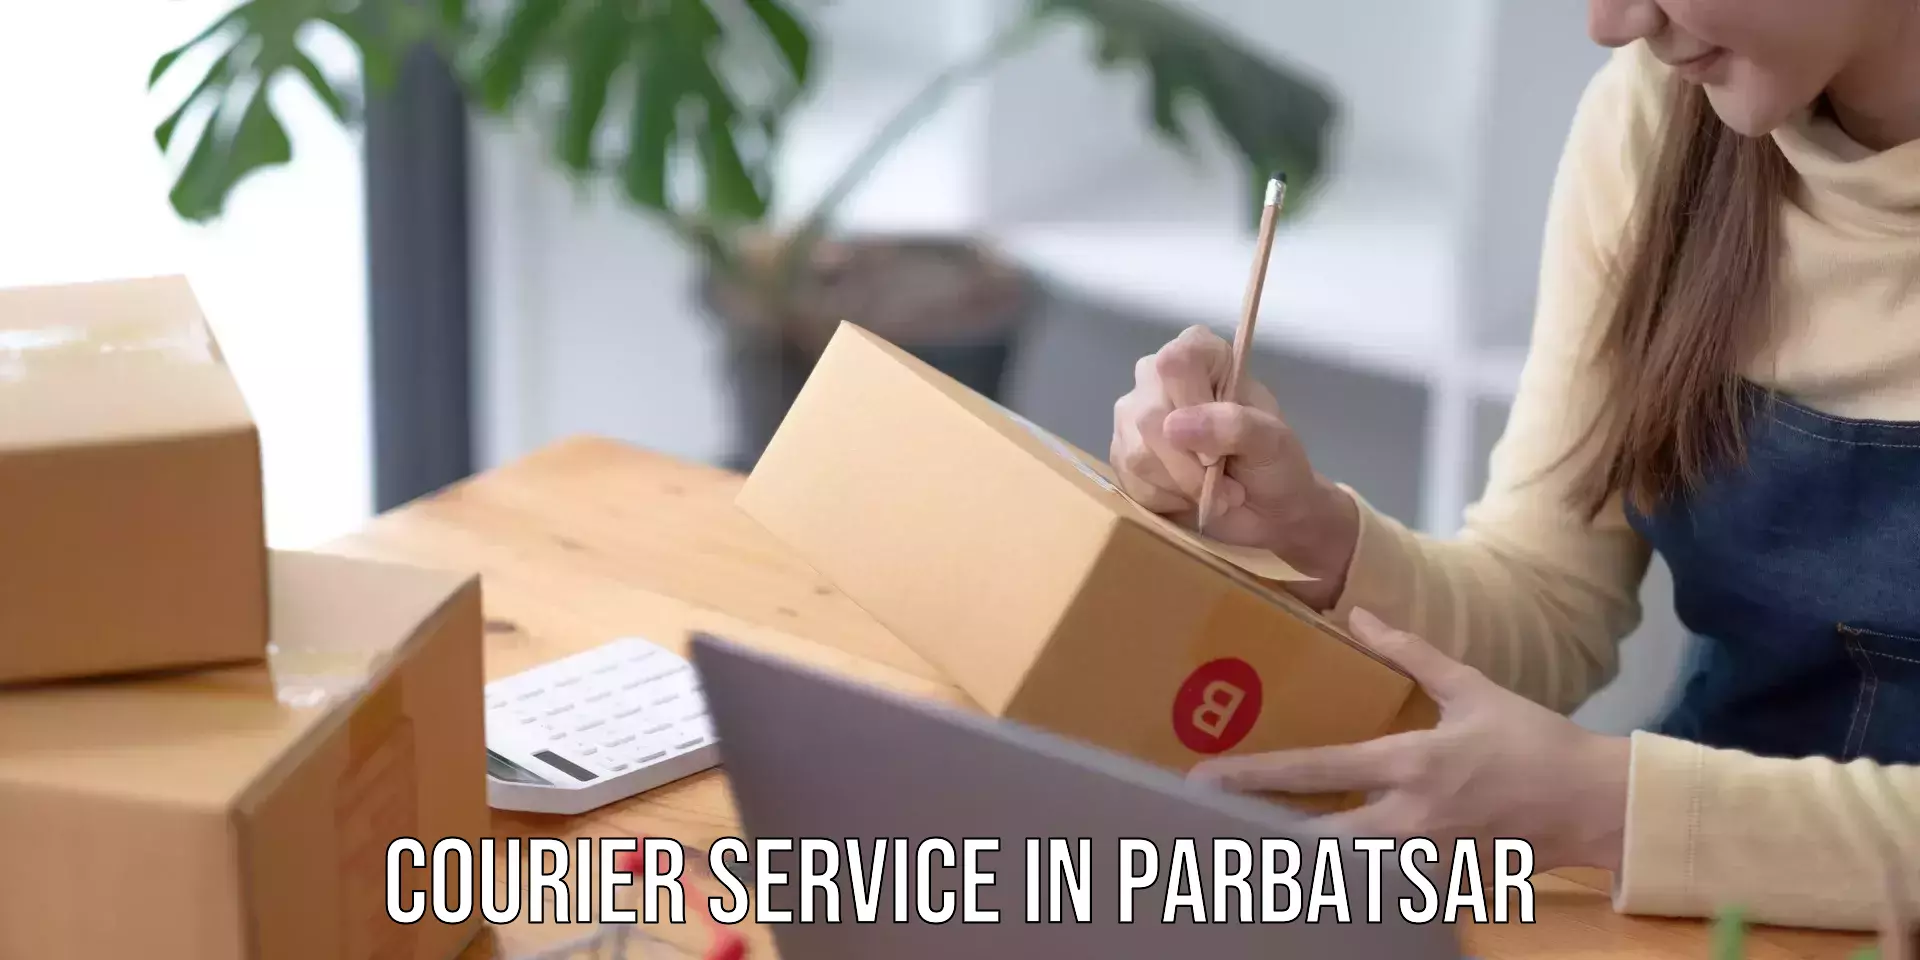 Tracking updates in Parbatsar